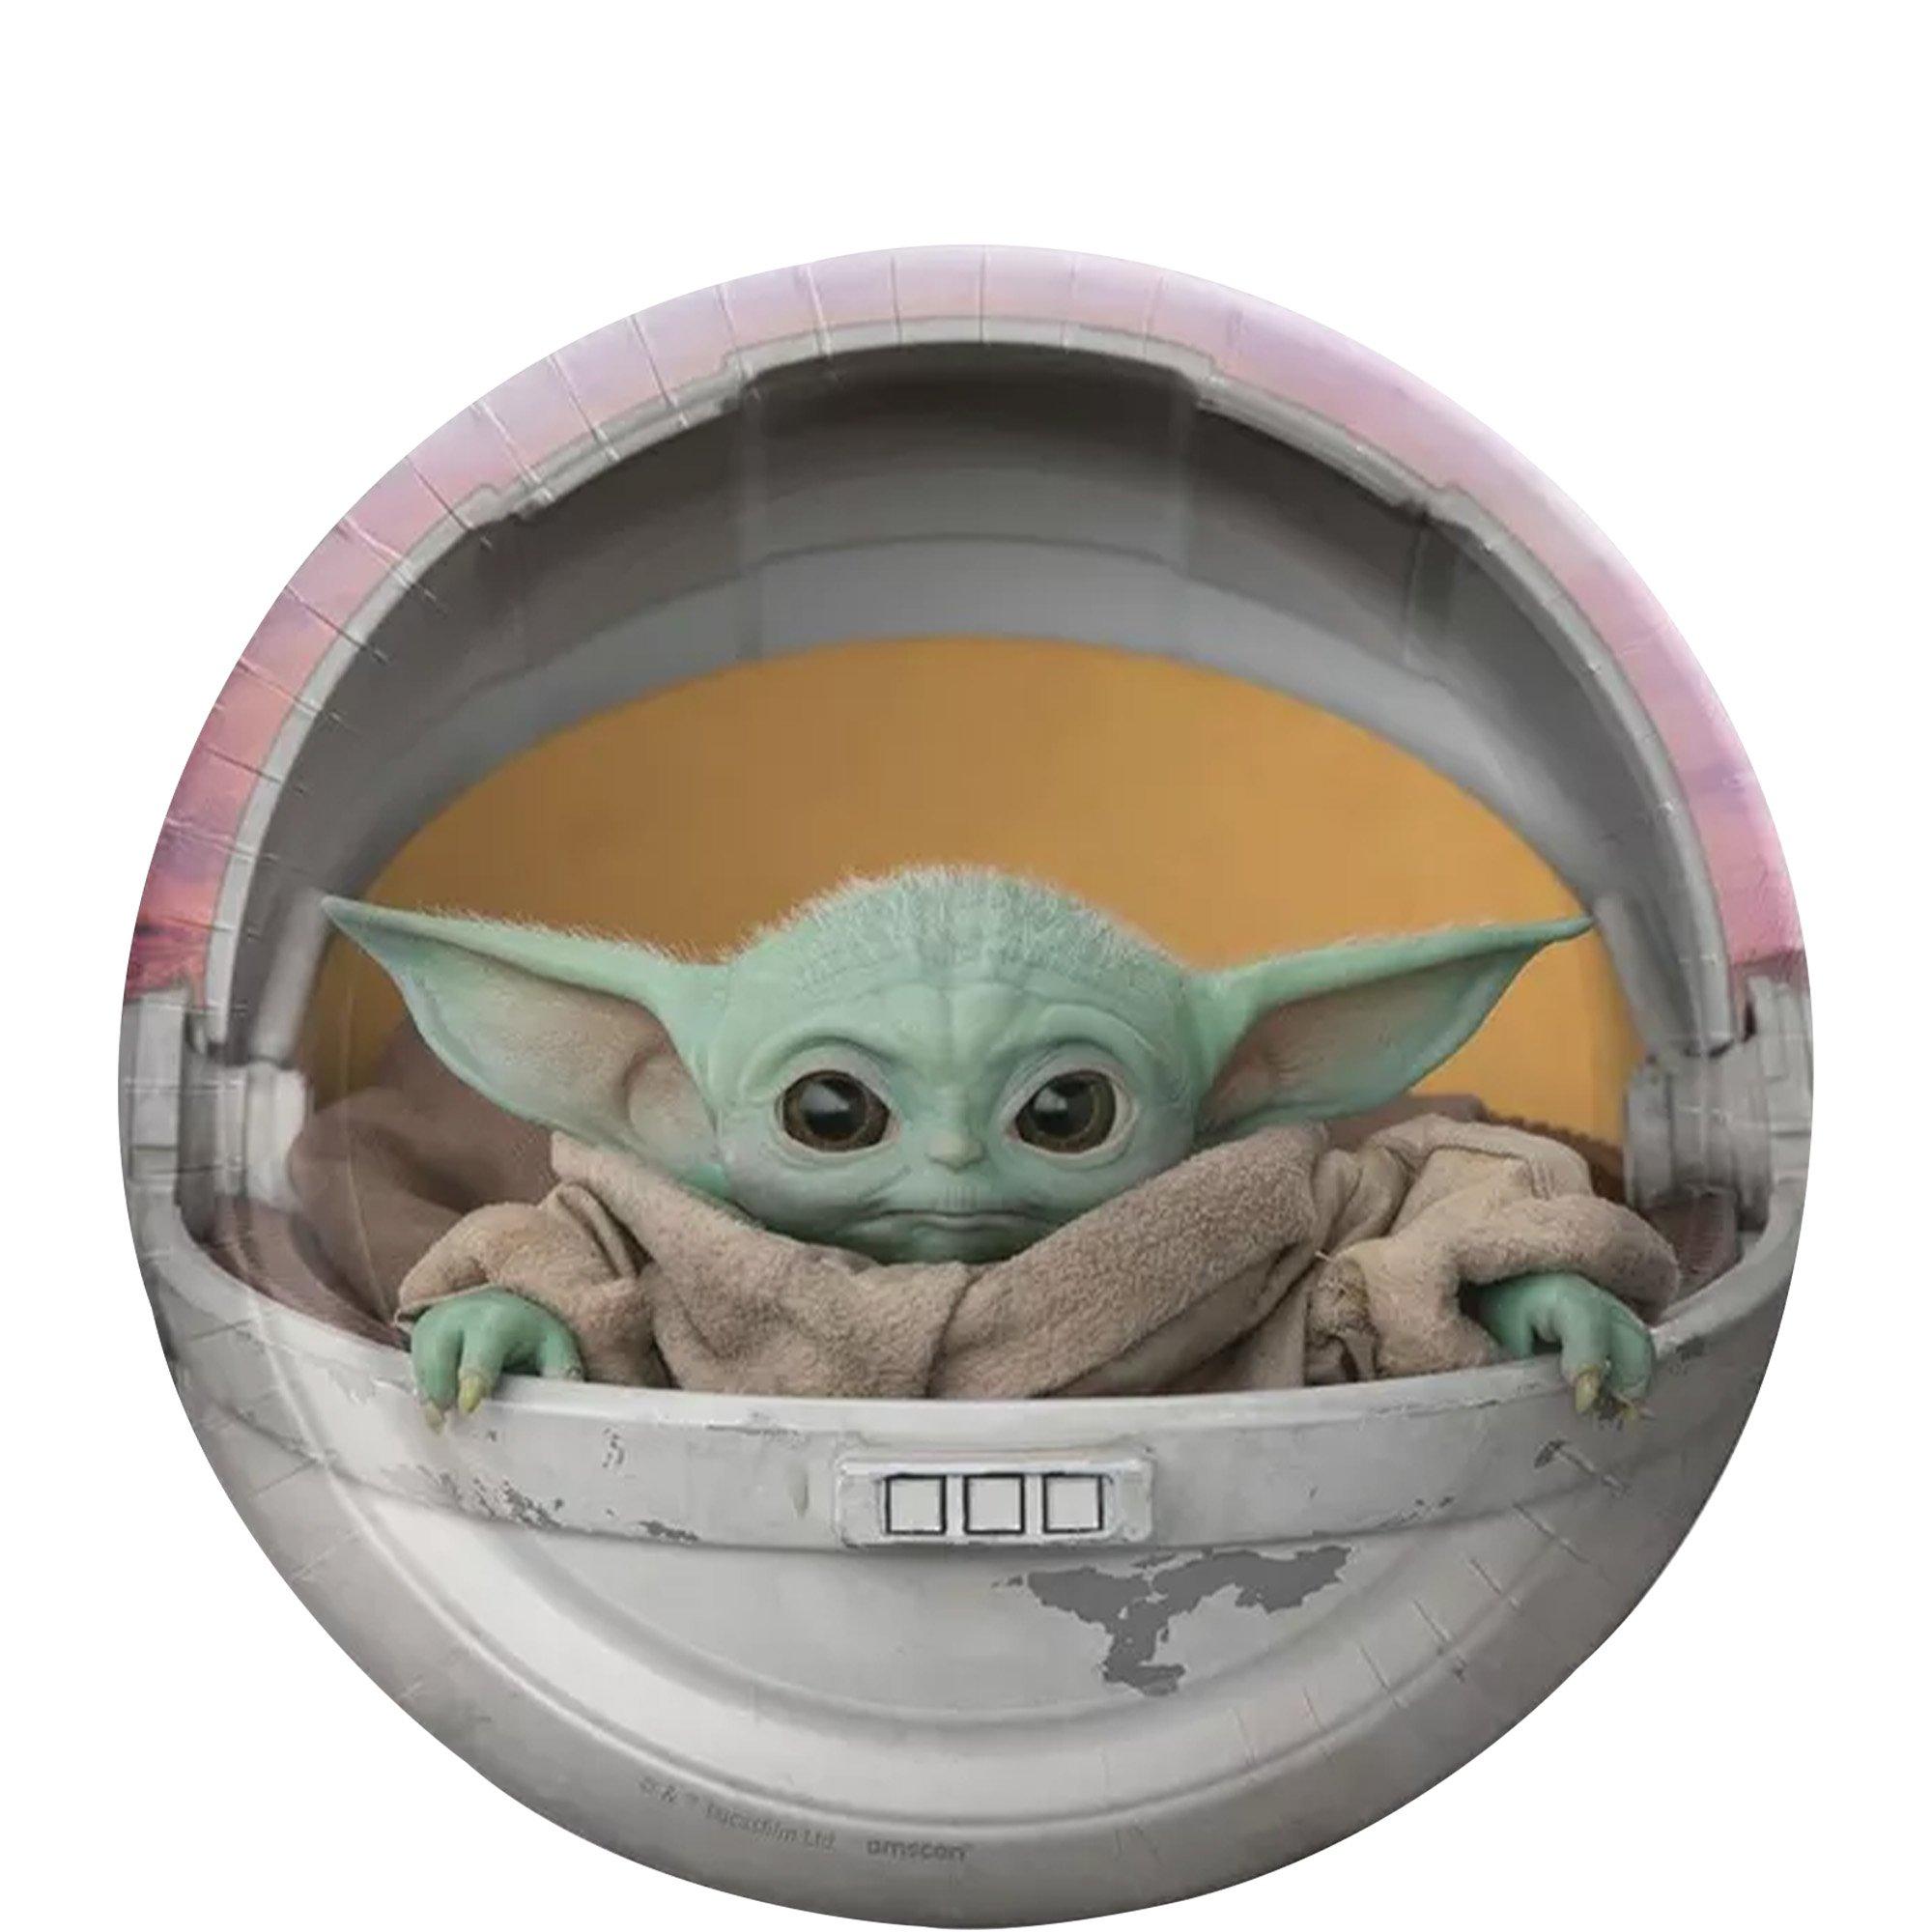  STAR WARS LED Night Light, Baby Yoda Floating Carrier